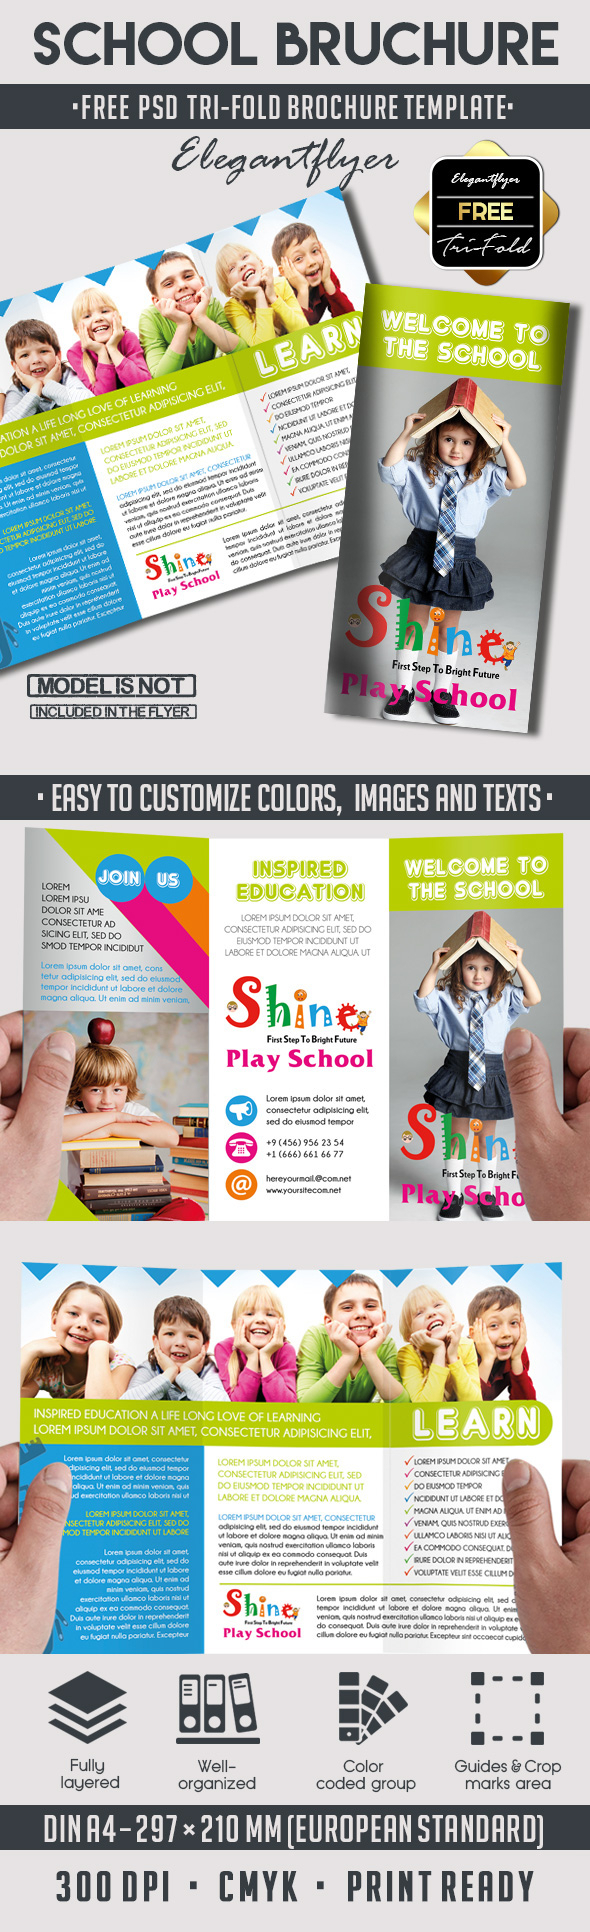 School – Free Psd Tri Fold Psd Brochure Template On Behance Throughout Play School Brochure Templates